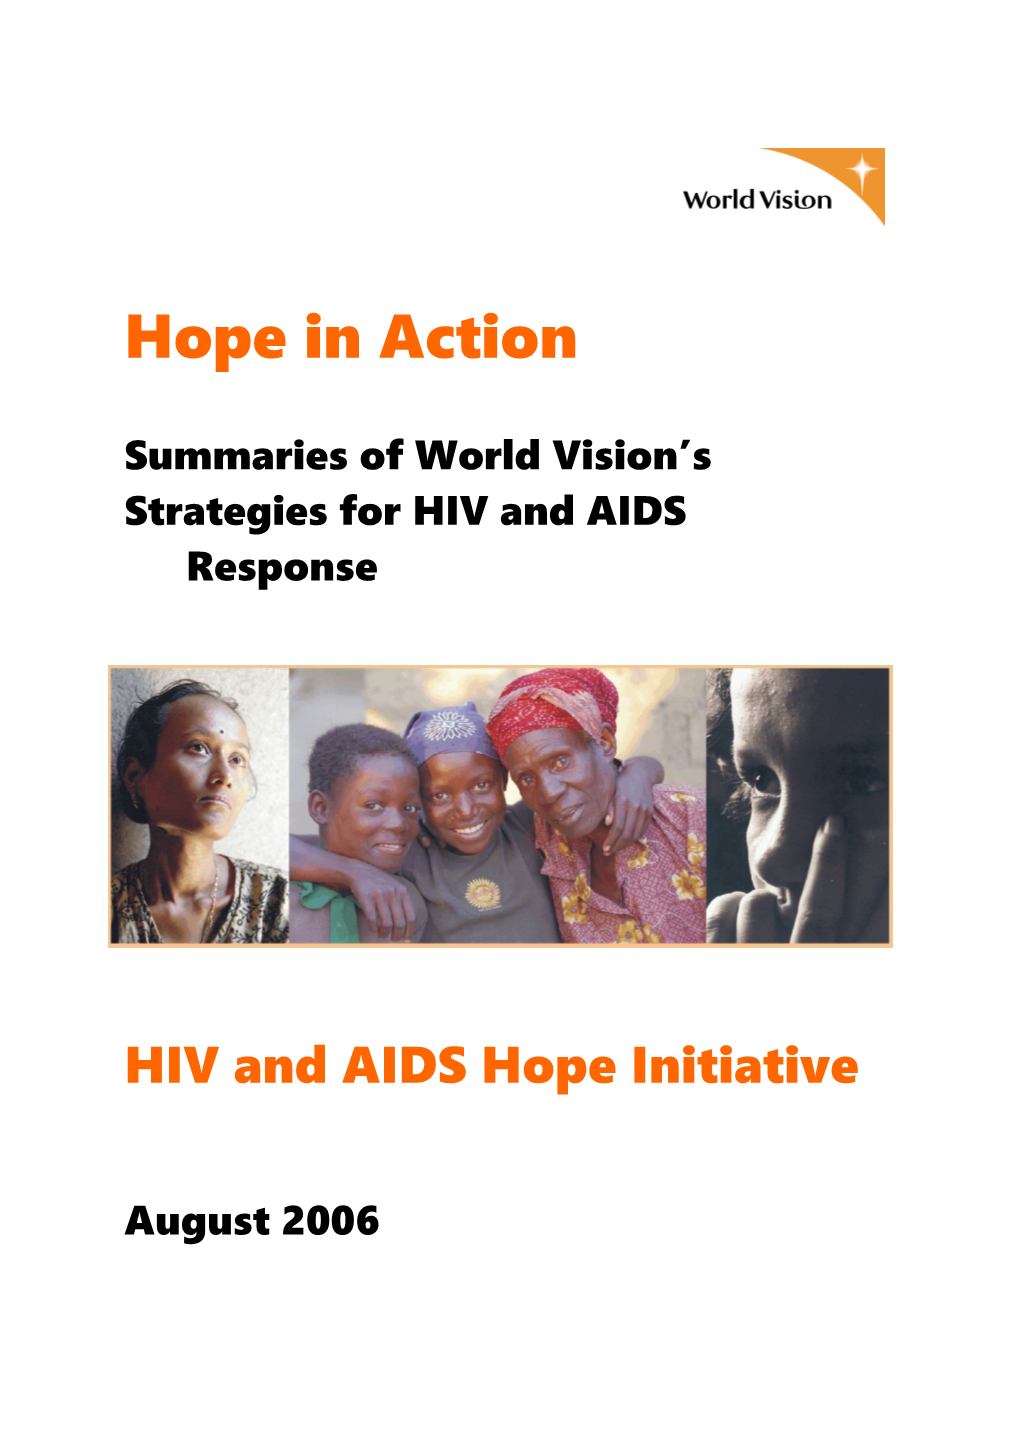 HIV Prevention for Children Aged 5-15